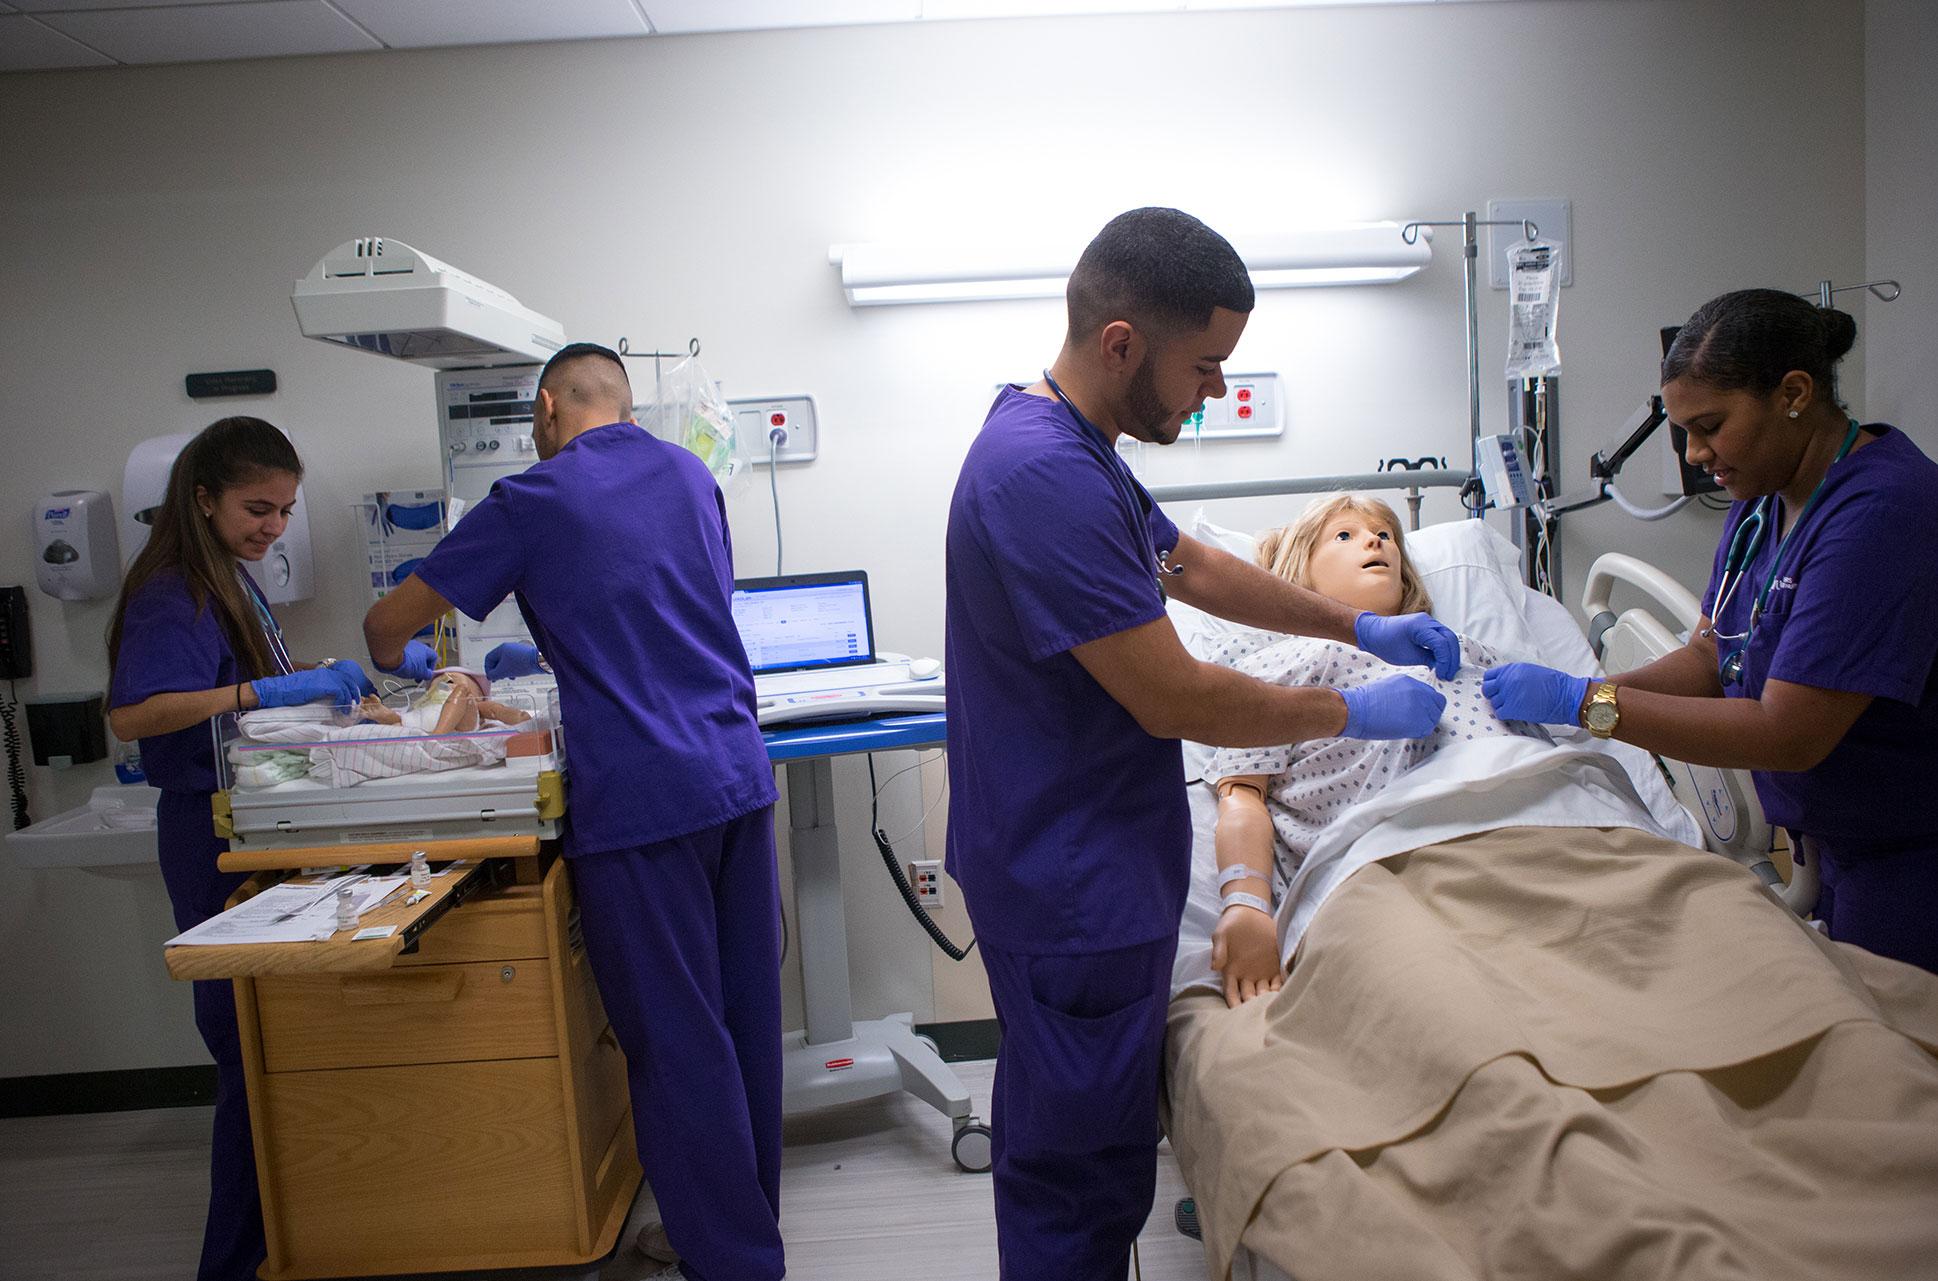 Nursing students work in NYU's simulation lab